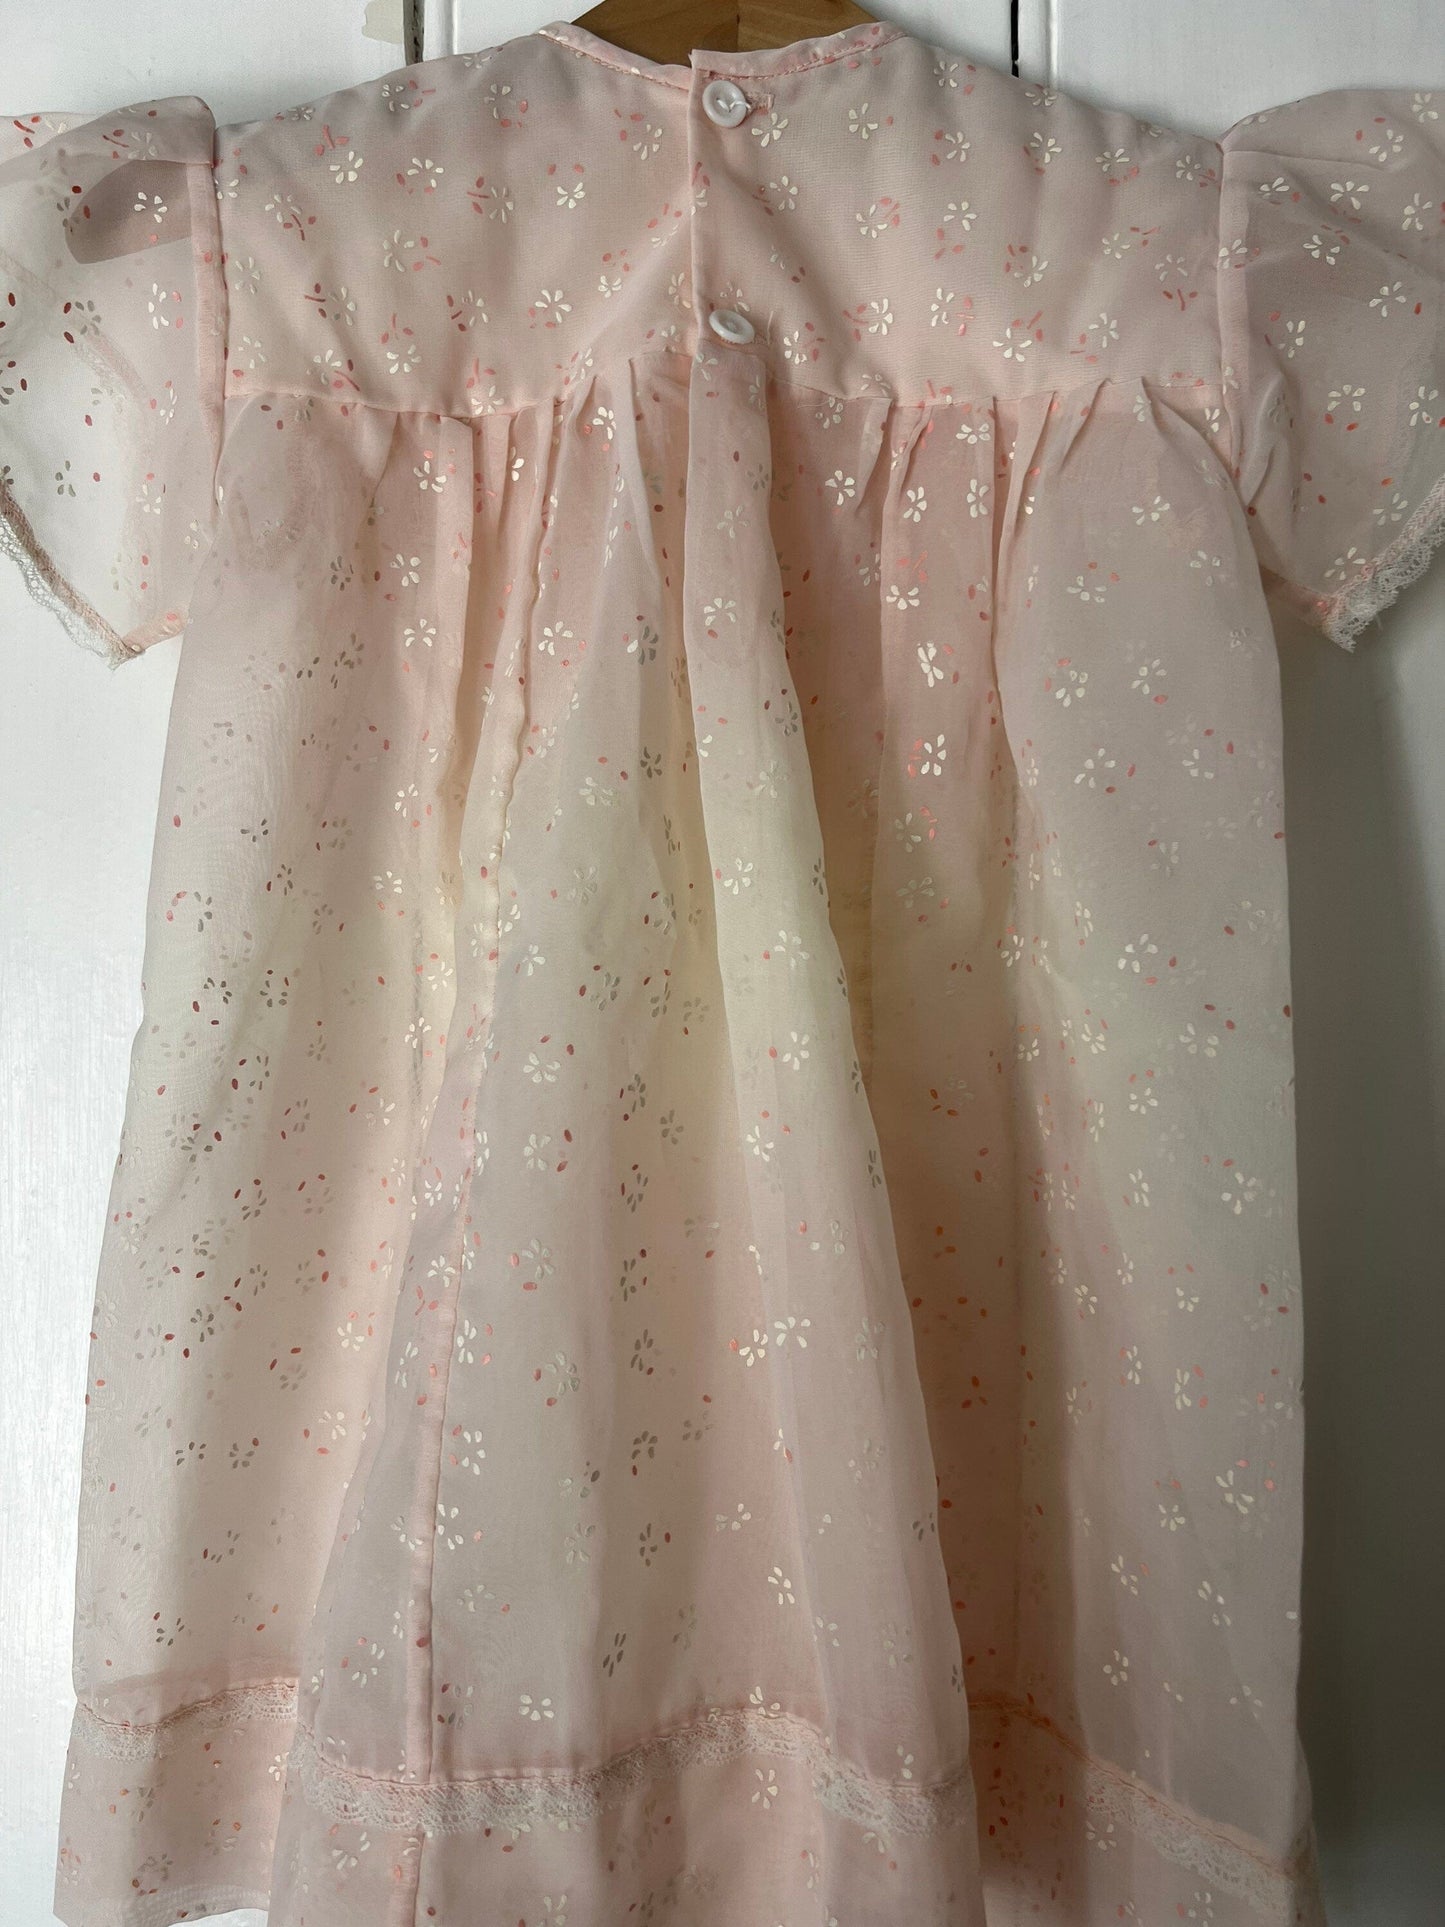 Vintage Girls Dress - pink cream ombré terylene Dress Baby Dress age 2-3 years